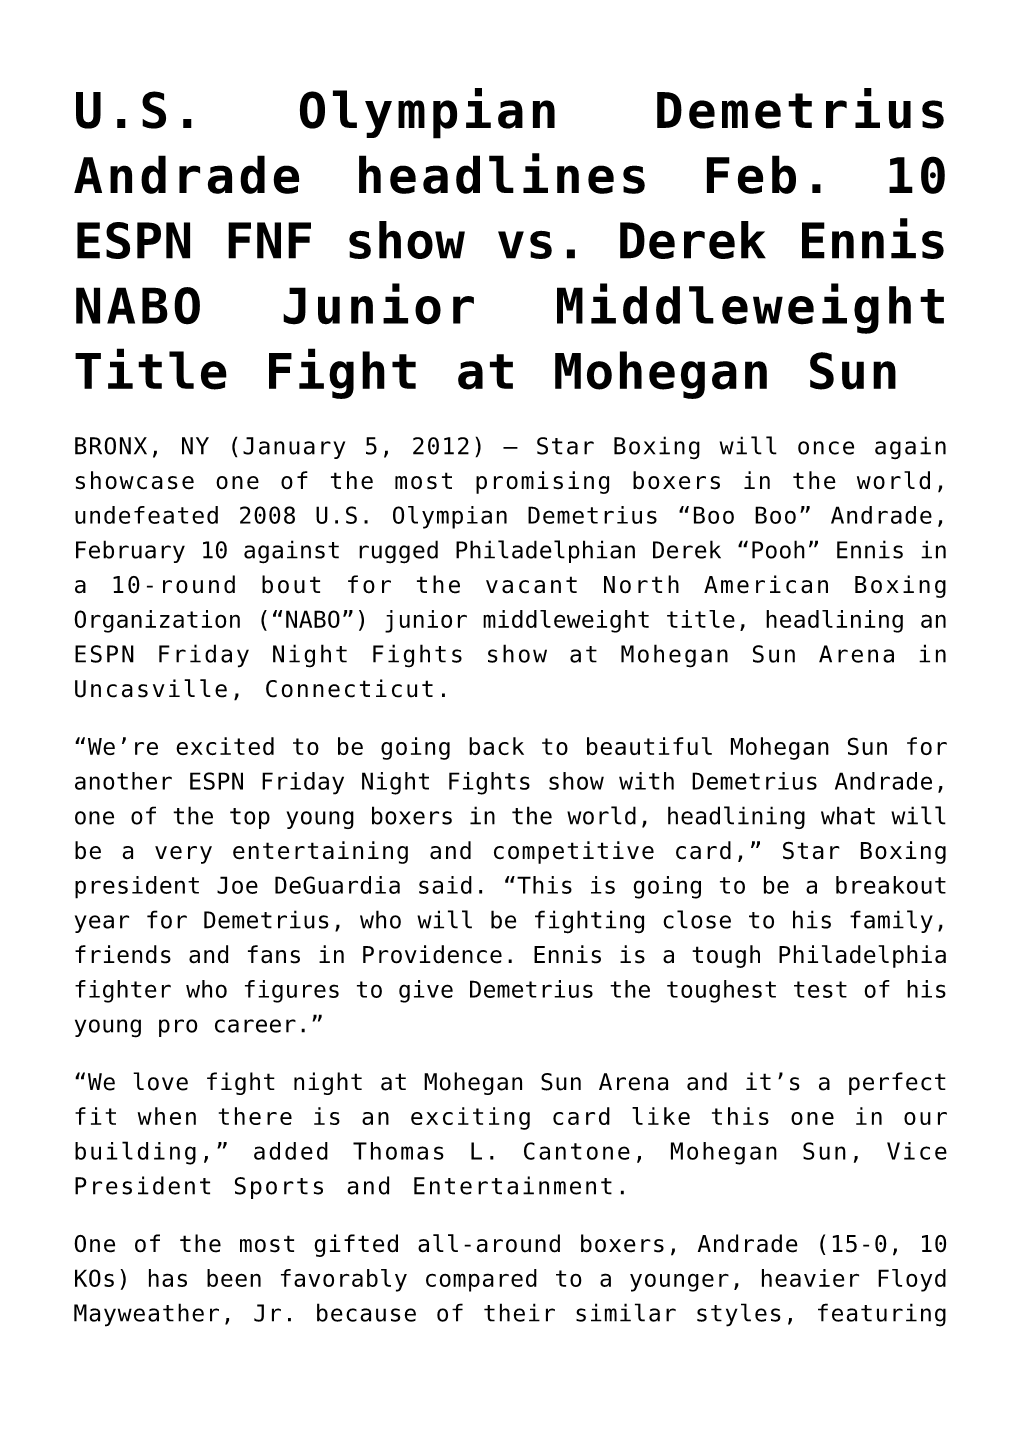 U.S. Olympian Demetrius Andrade Headlines Feb. 10 ESPN FNF Show Vs